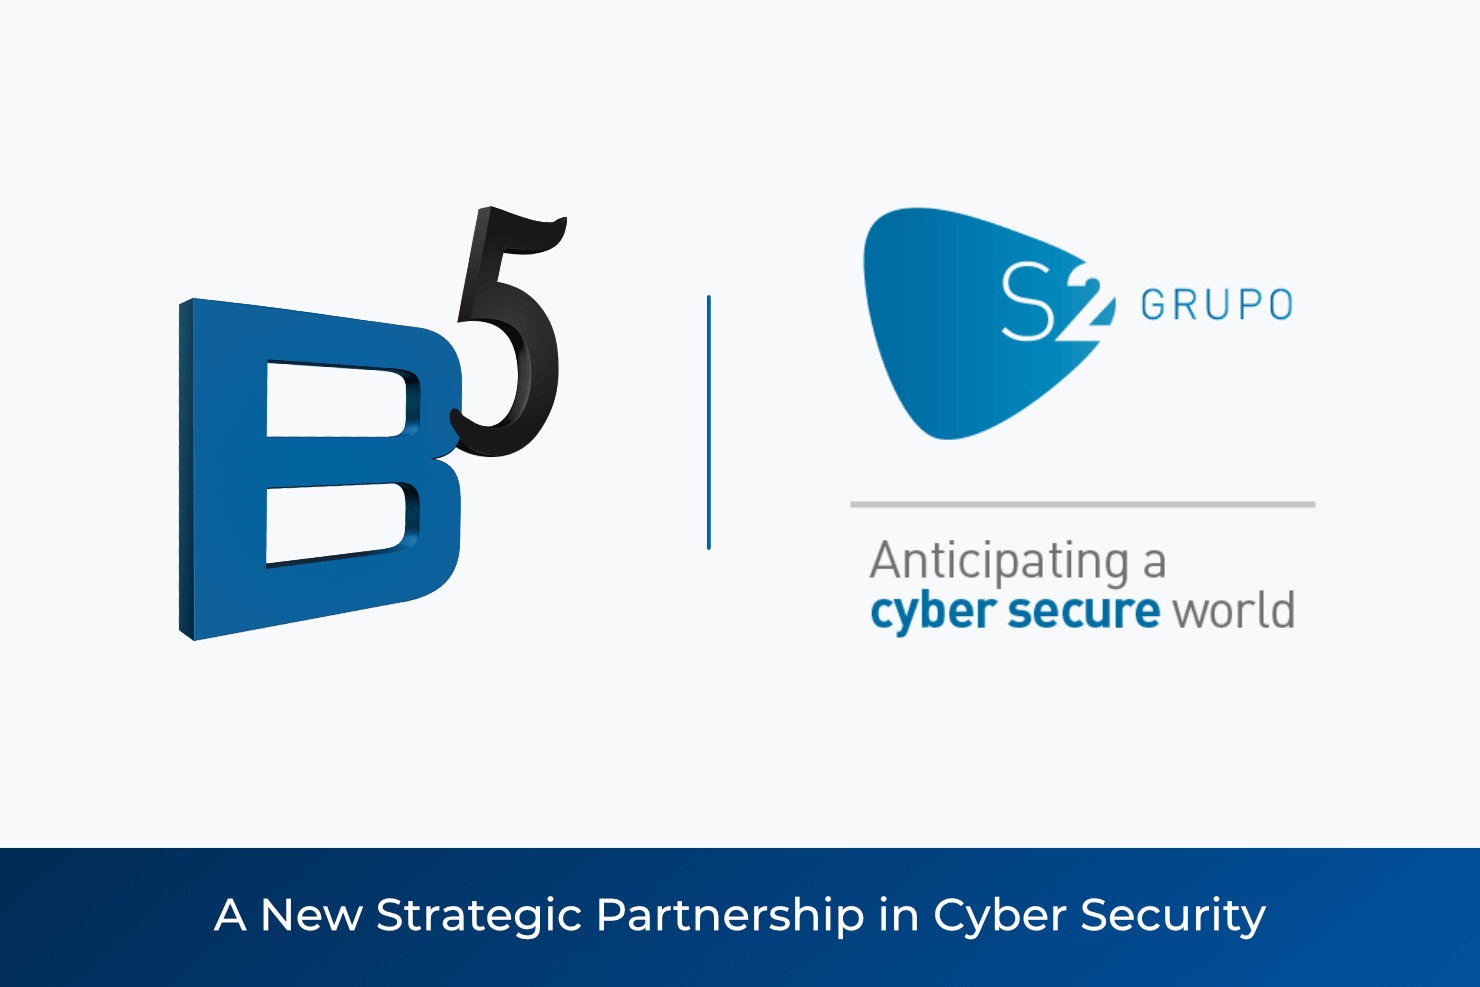 Blu5 - S2 Grupo strategic partnership announcement